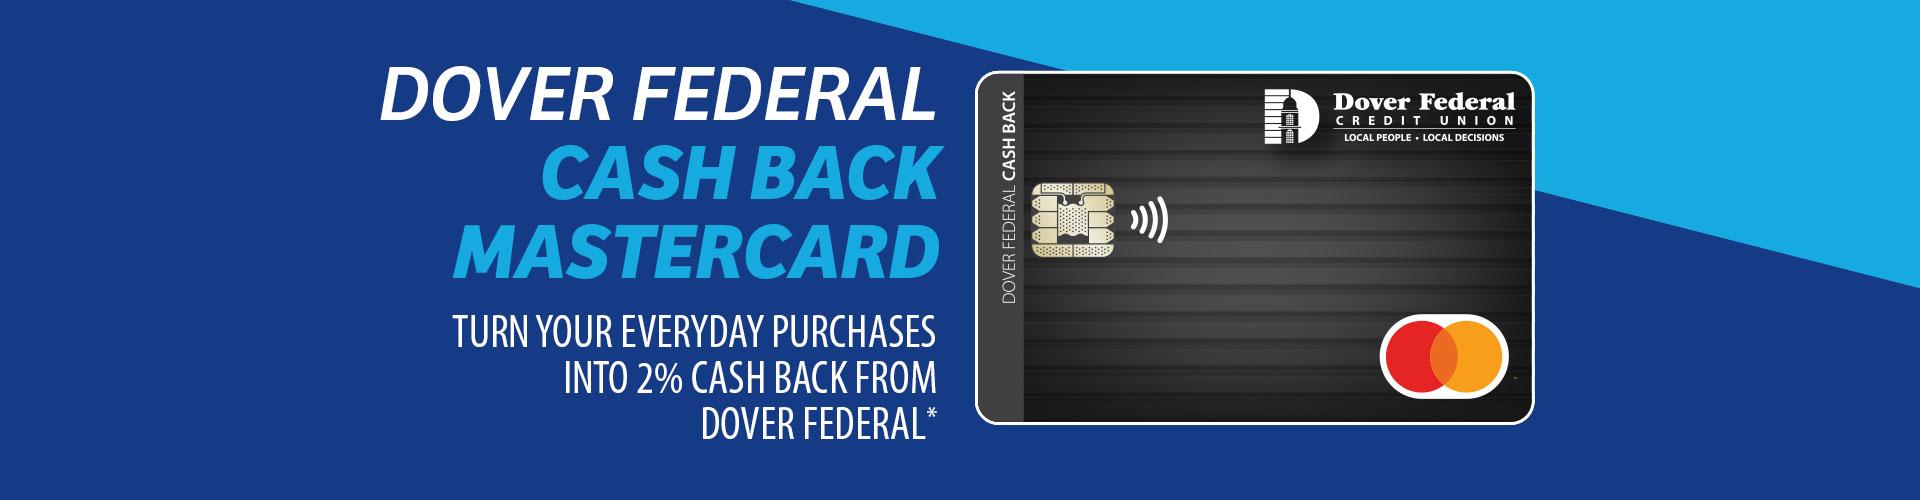 Dover Federal Cash Back Mastercard